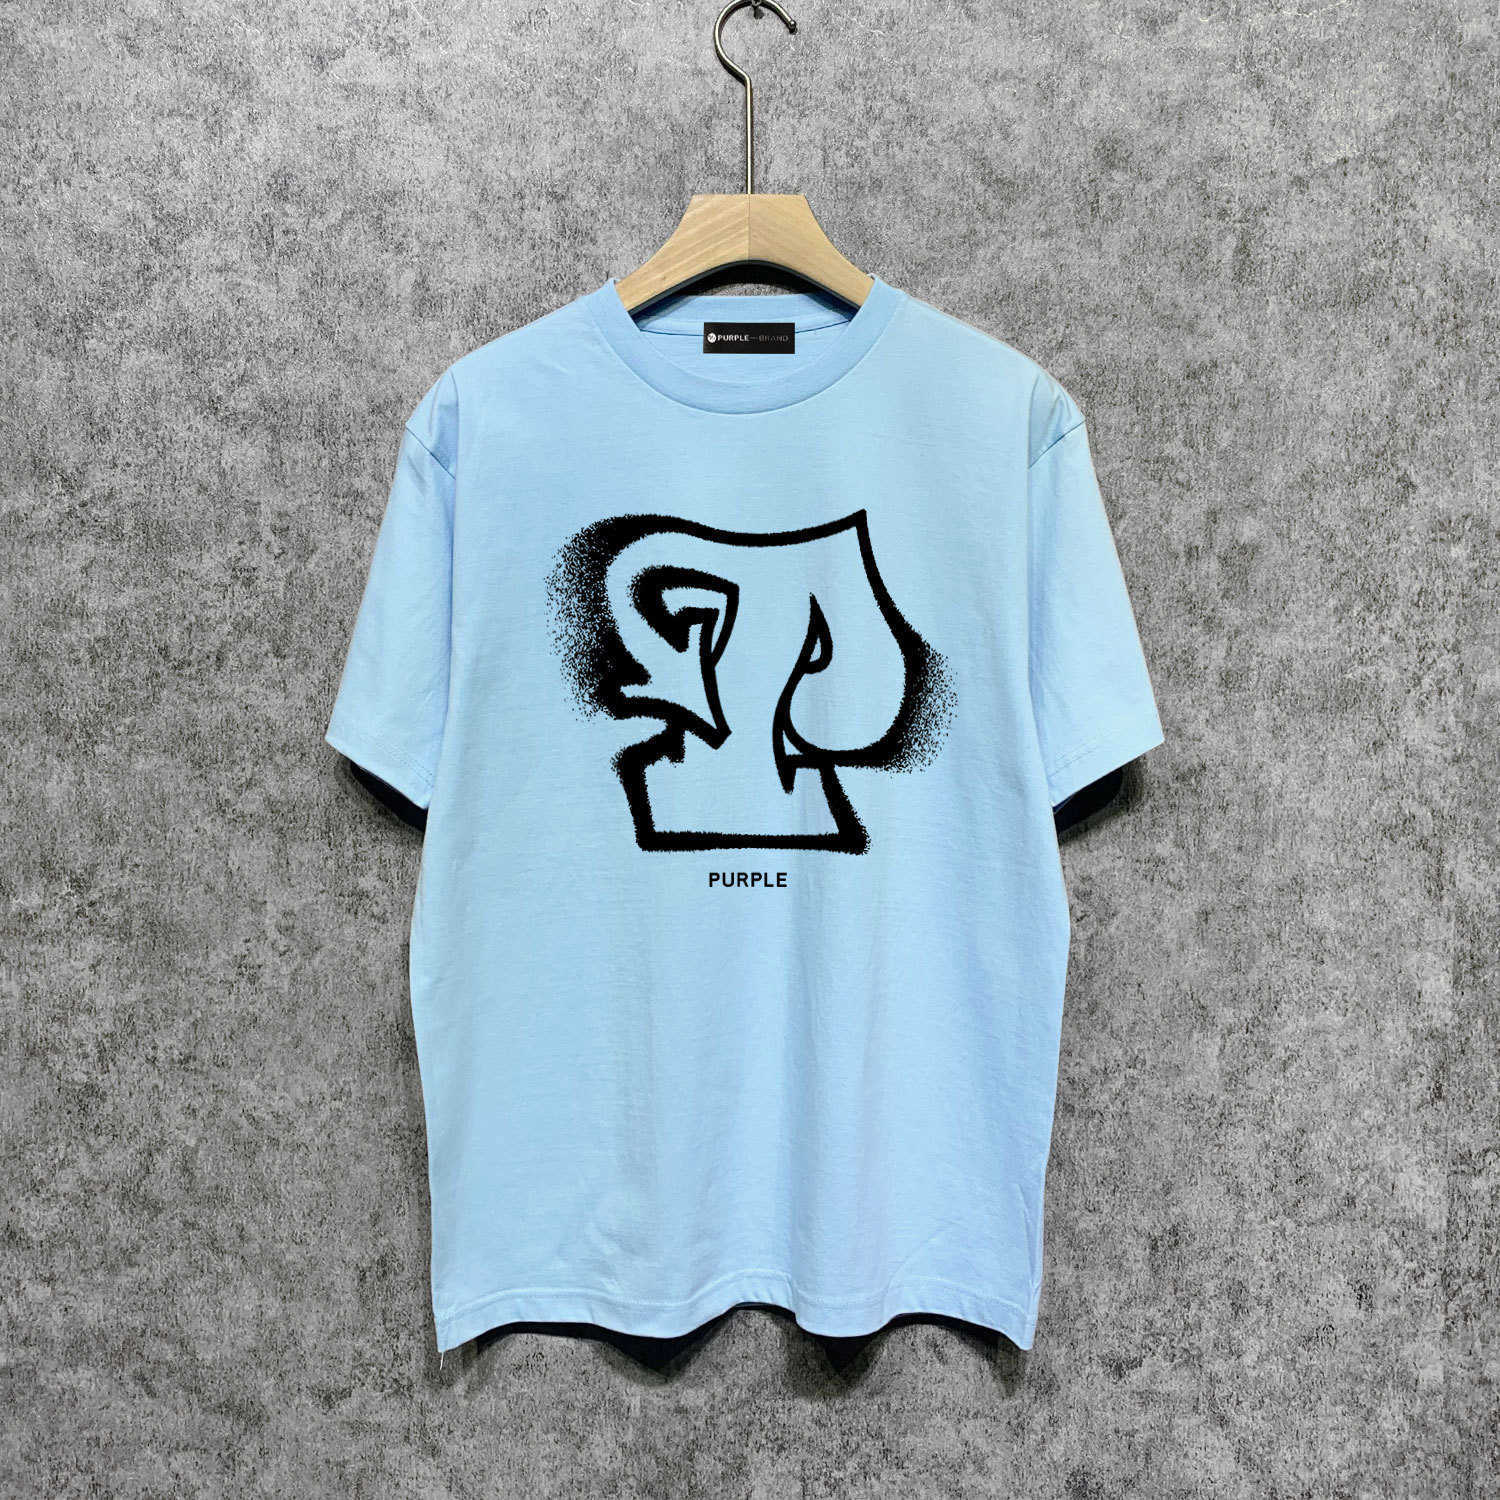 Долгосрочная модная брендовая футболка PURPLE BRAND T SHIRT с короткими рукавамиF5P3